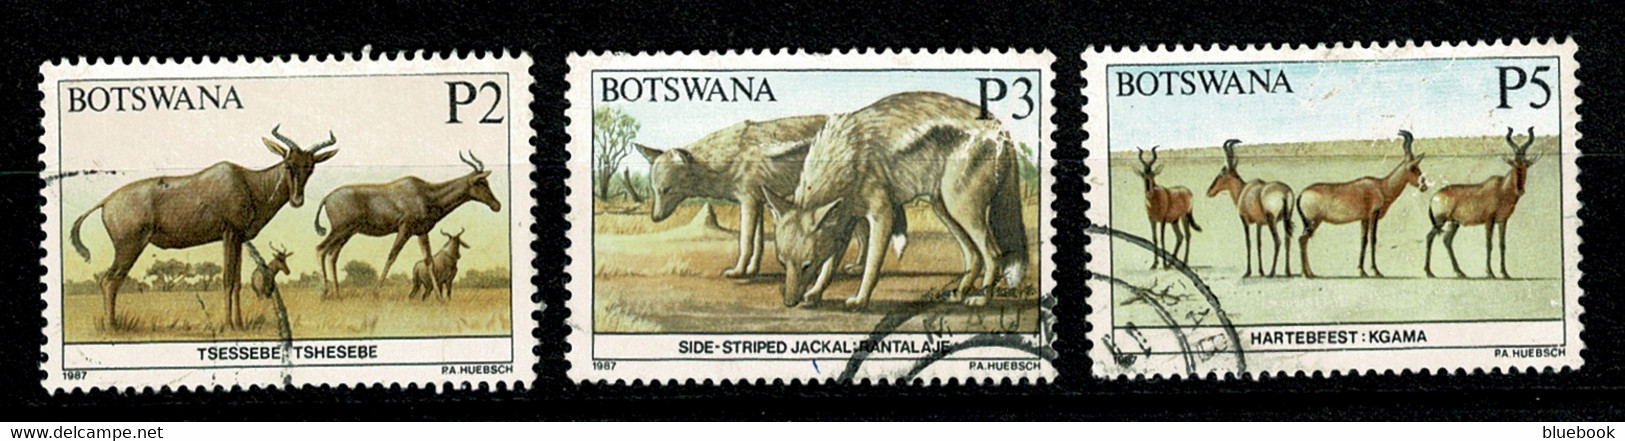 Ref 1596 -  Botswana 1987 Animals - Set Of Fine Used Stamps SG. 619/638 - Botswana (1966-...)